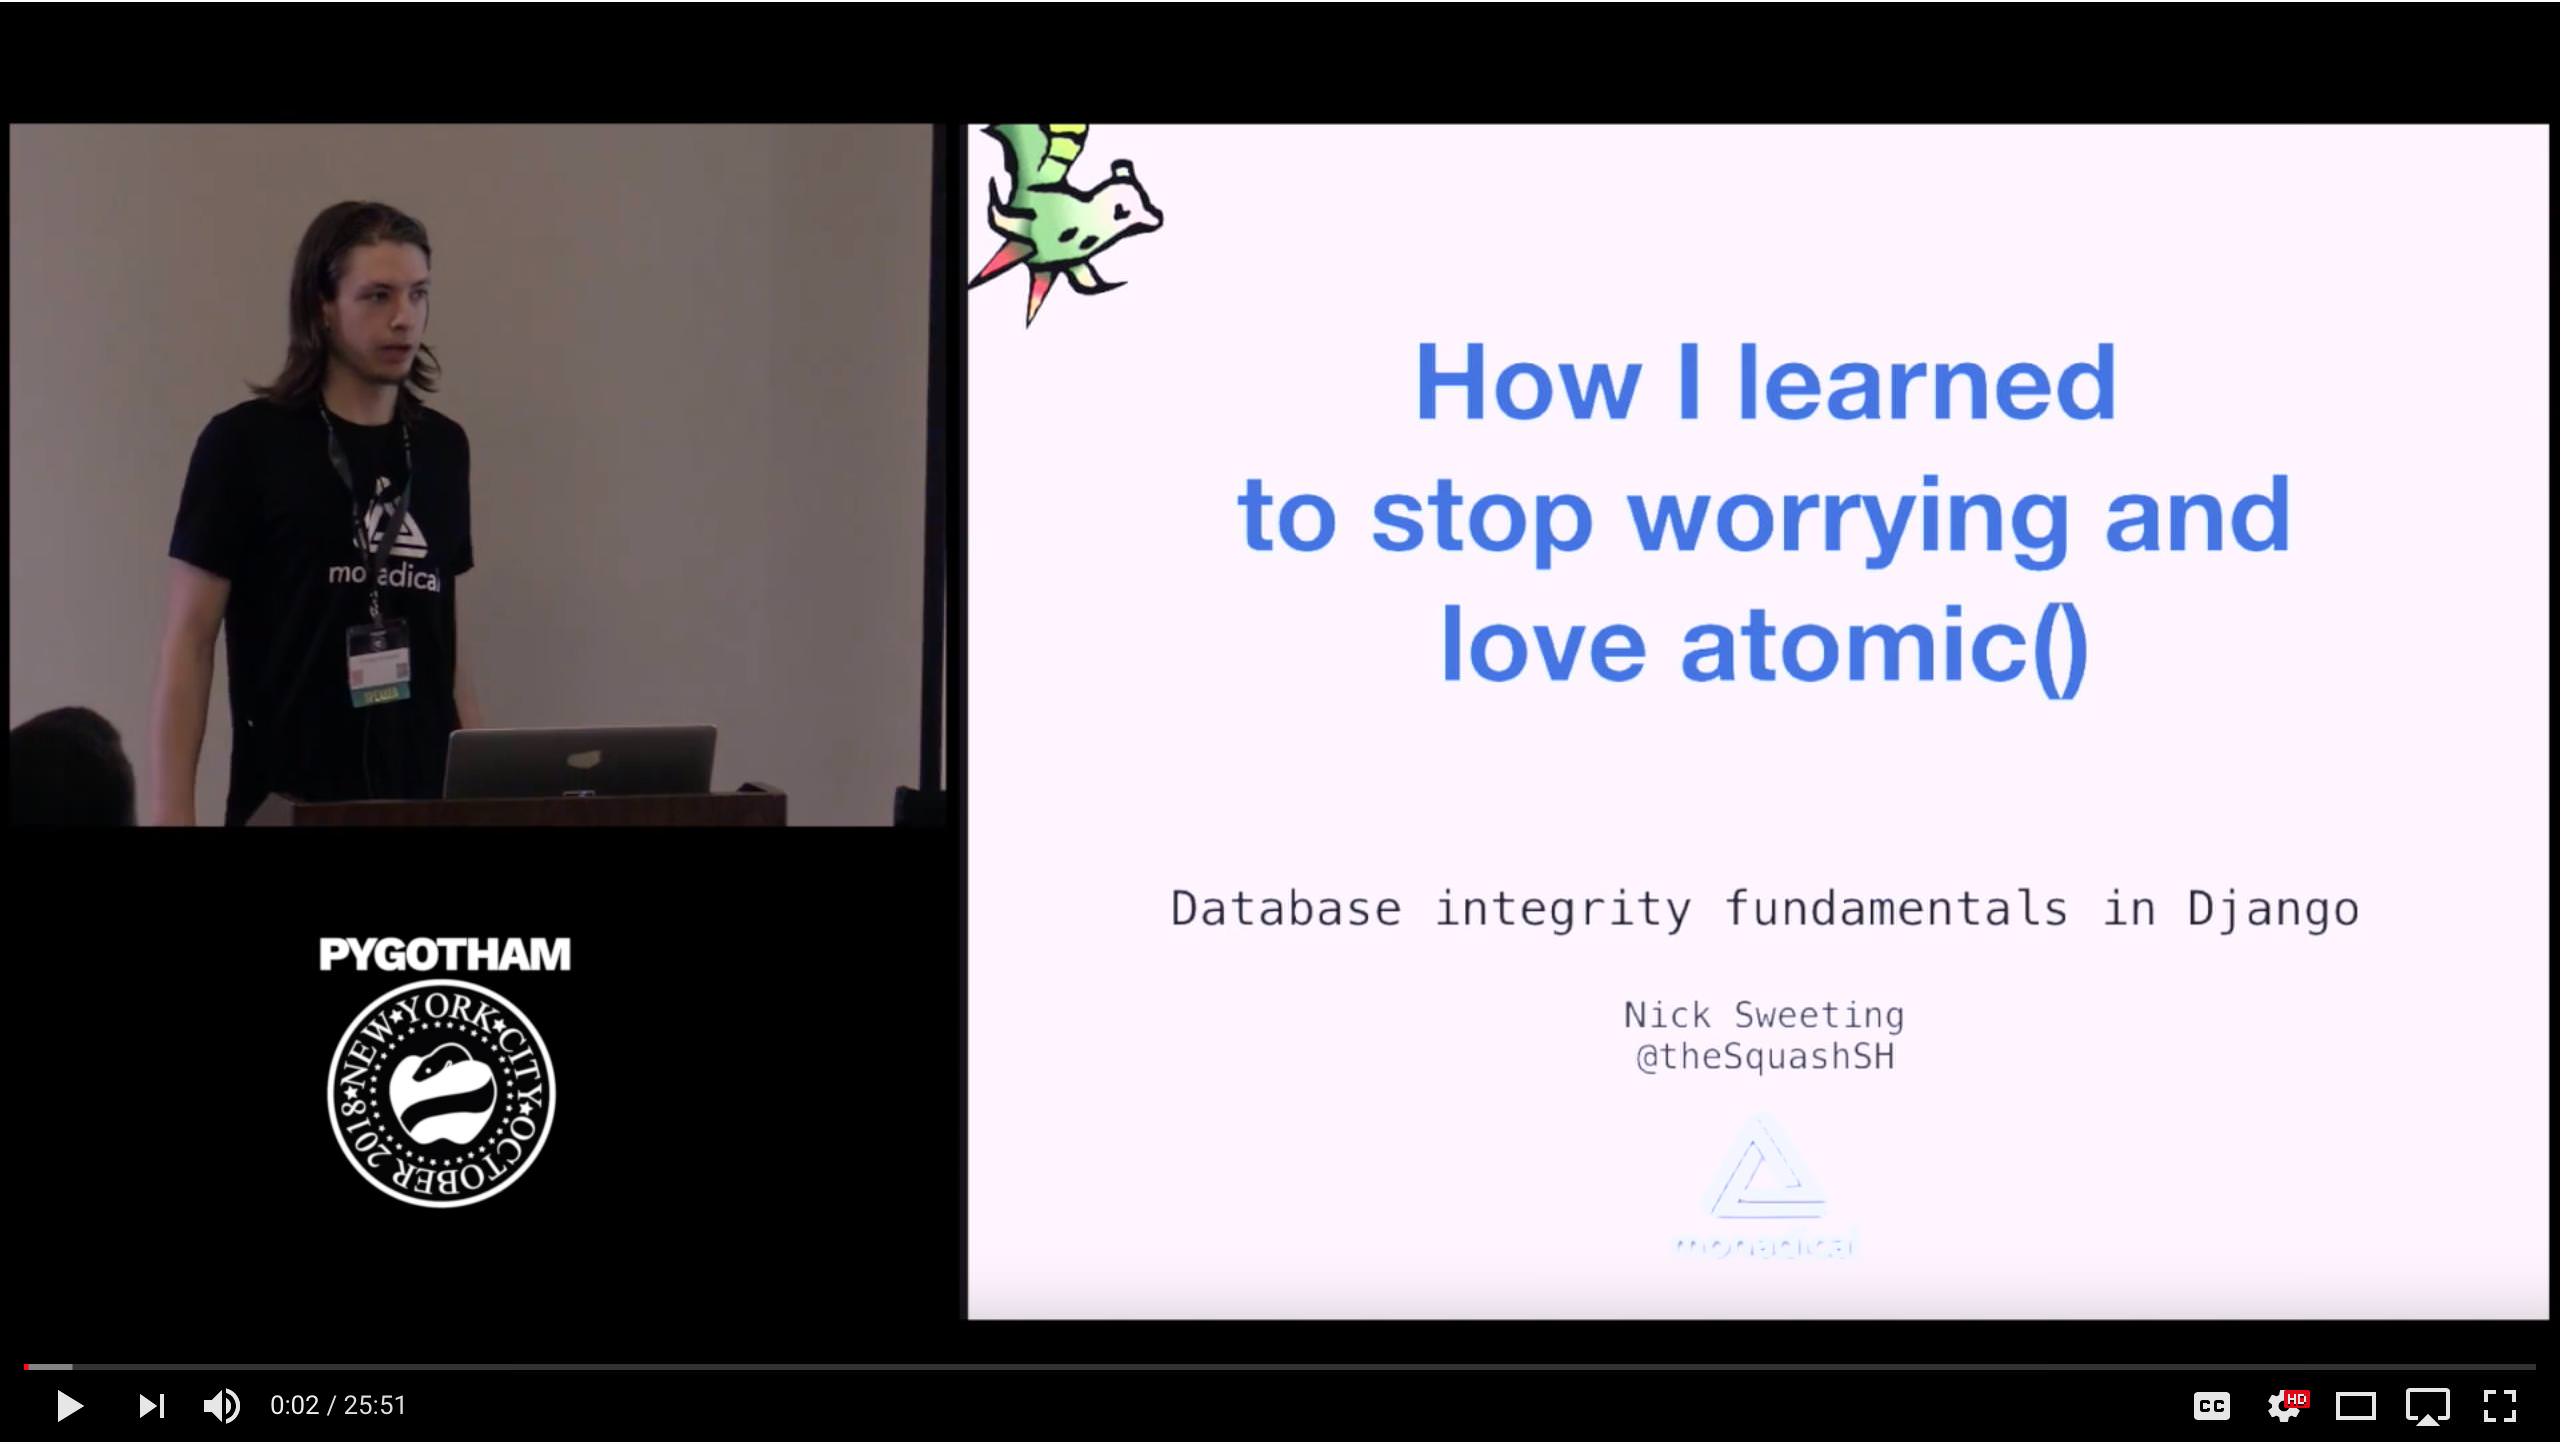 First slide of talk